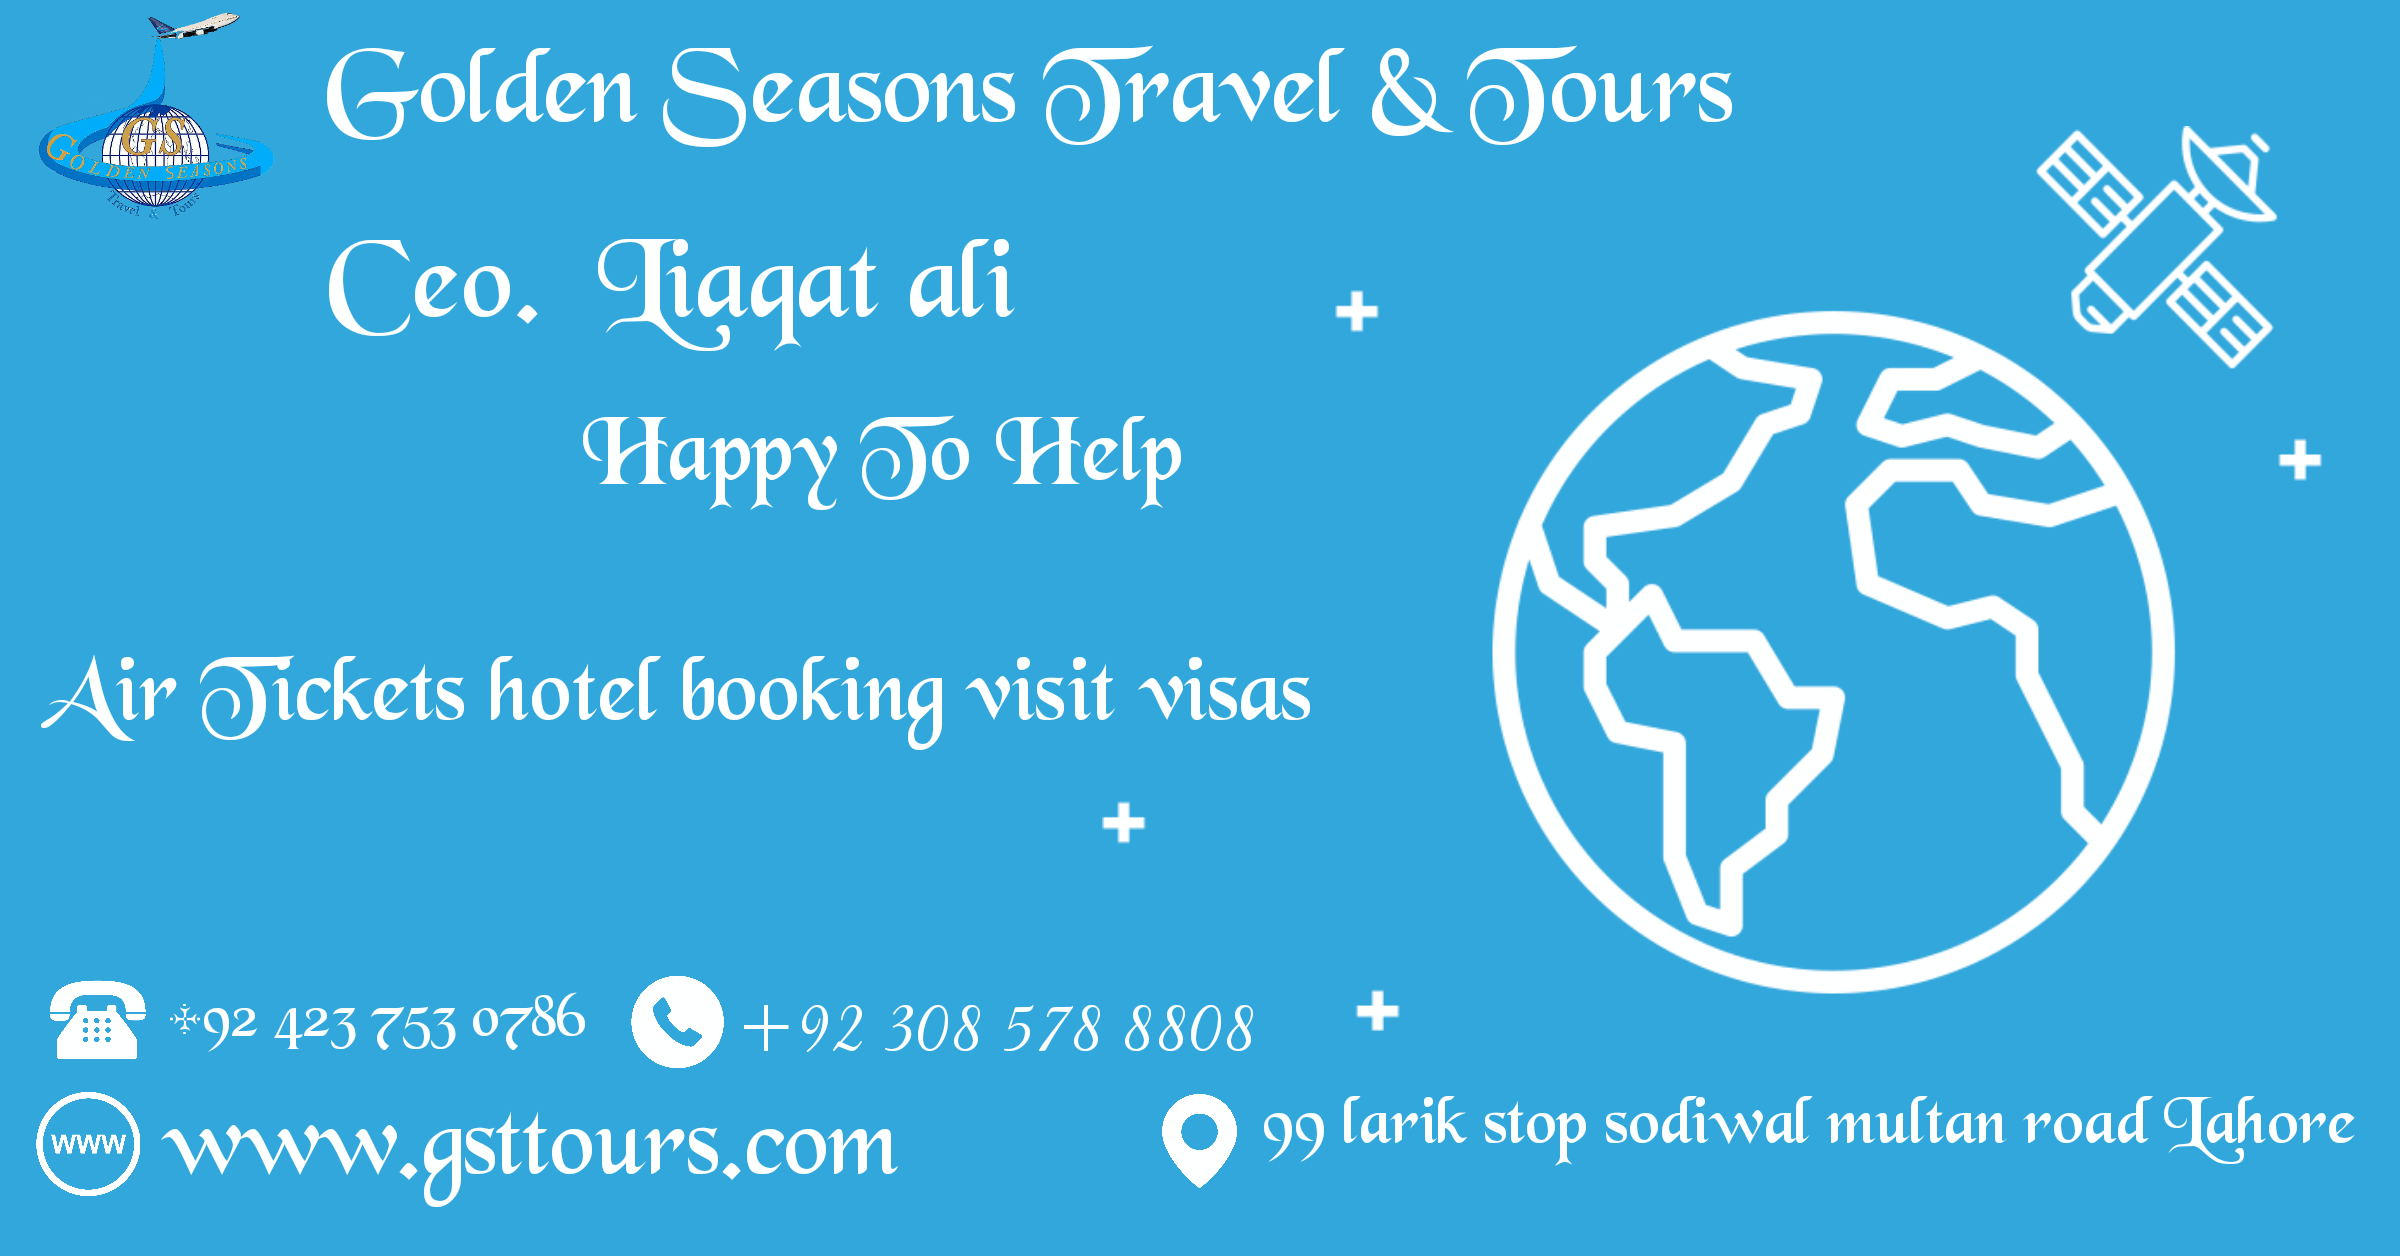 Golden Seasons Travel & Tours